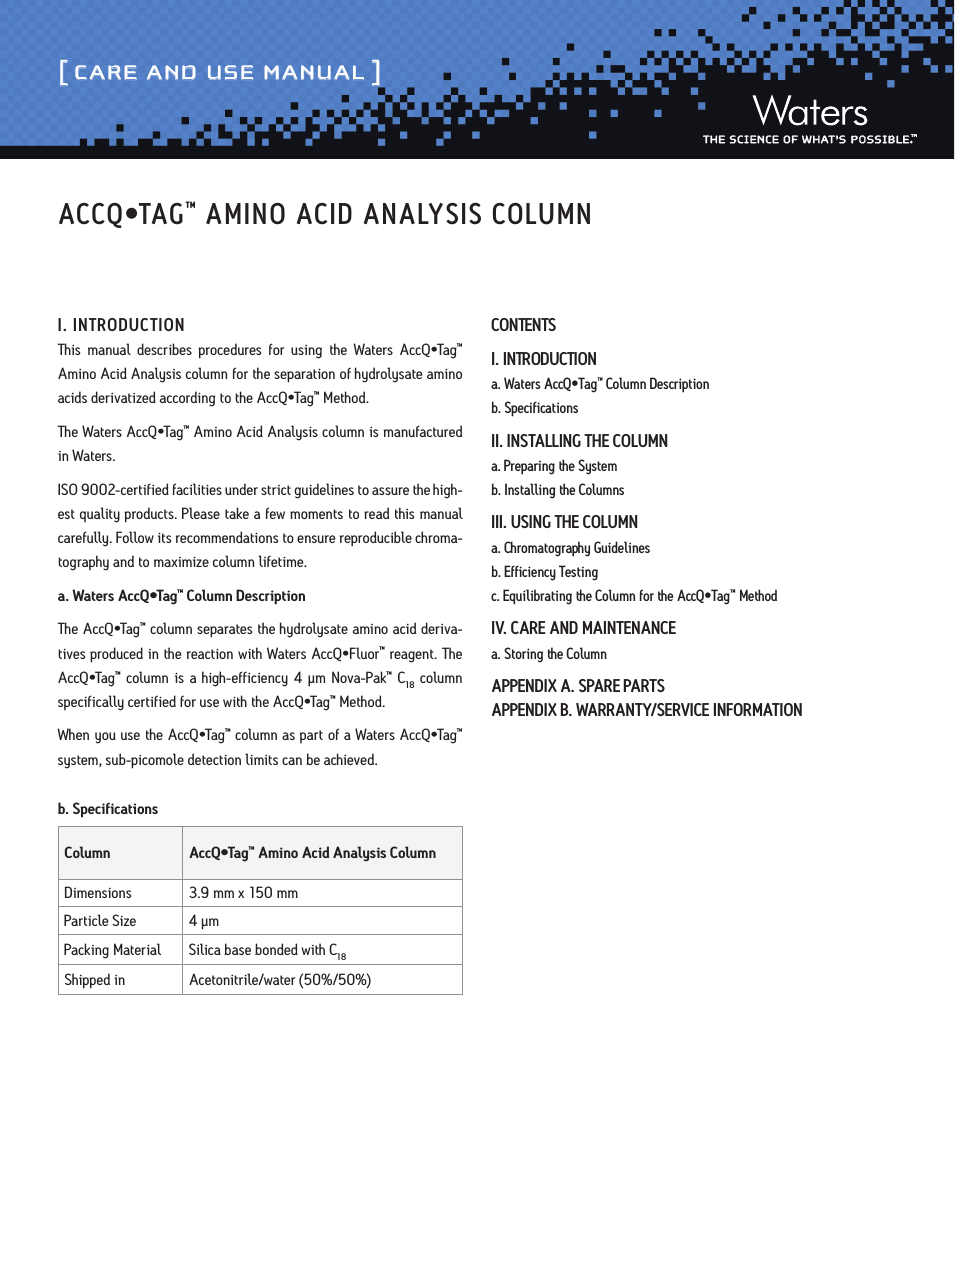 AccQ-Tag Amino Acid Analysis Column